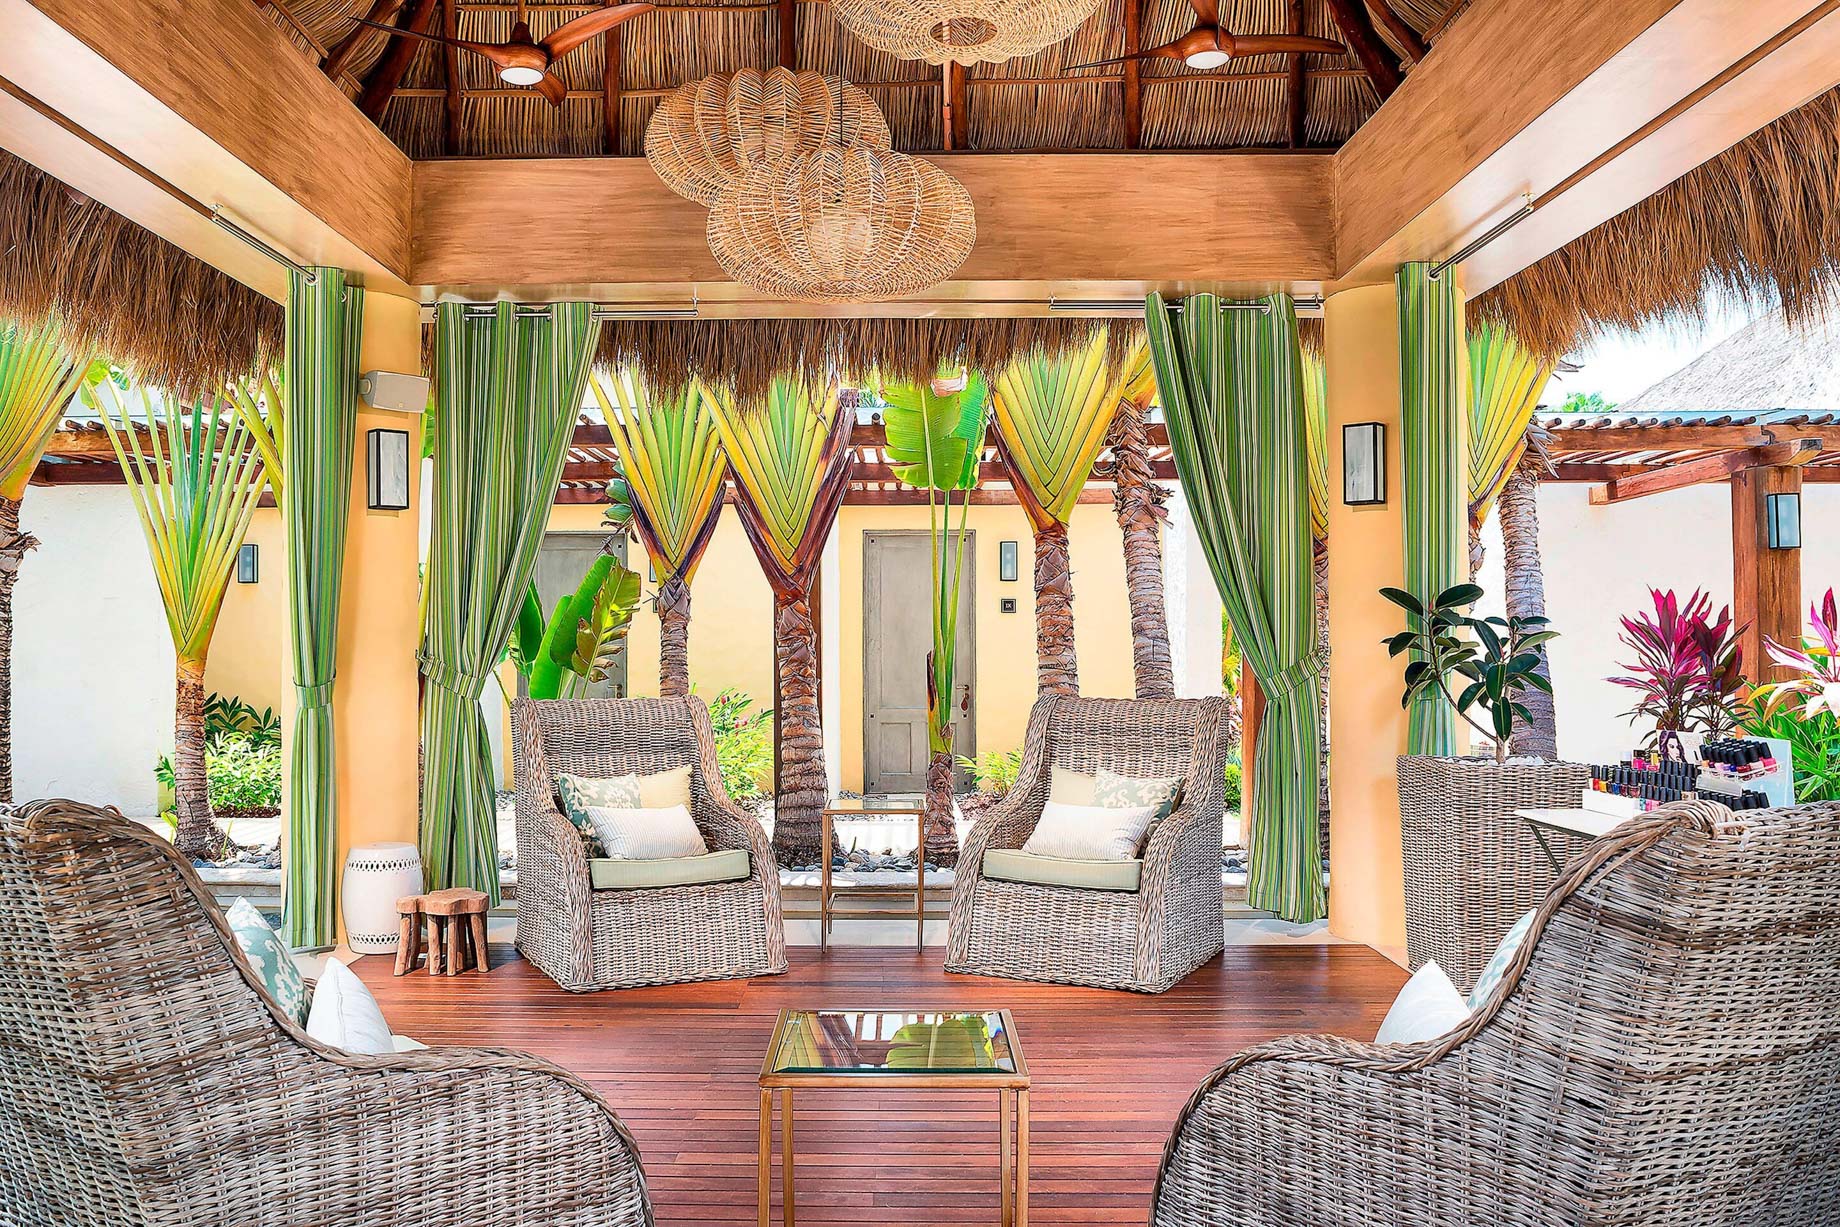 The St. Regis Punta Mita Resort - Nayarit, Mexico - Remède Spa Relaxation Island